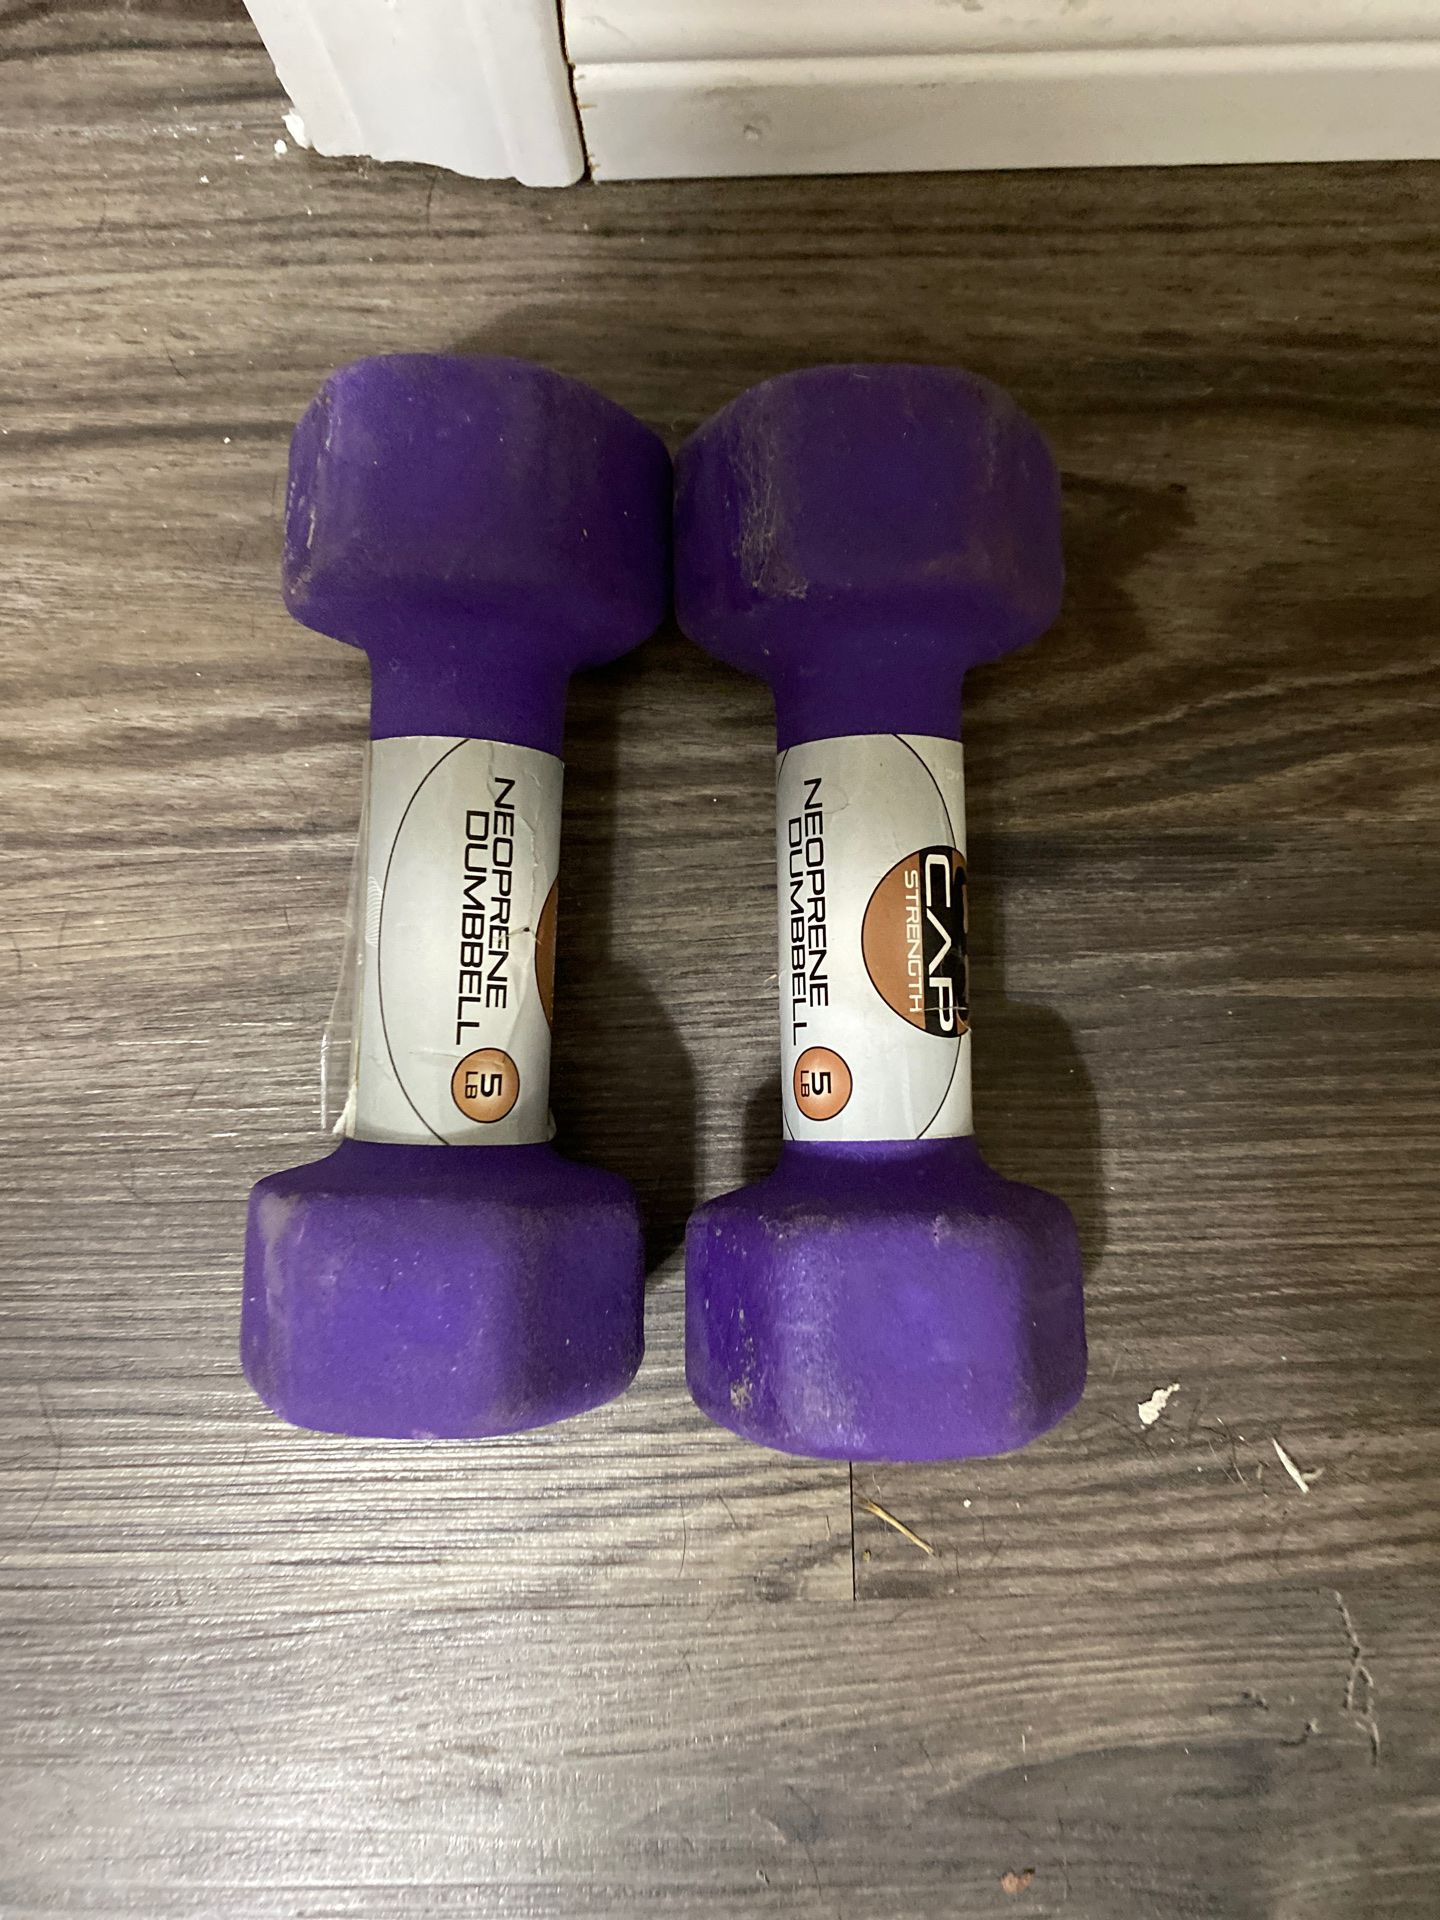 5LB purple weights